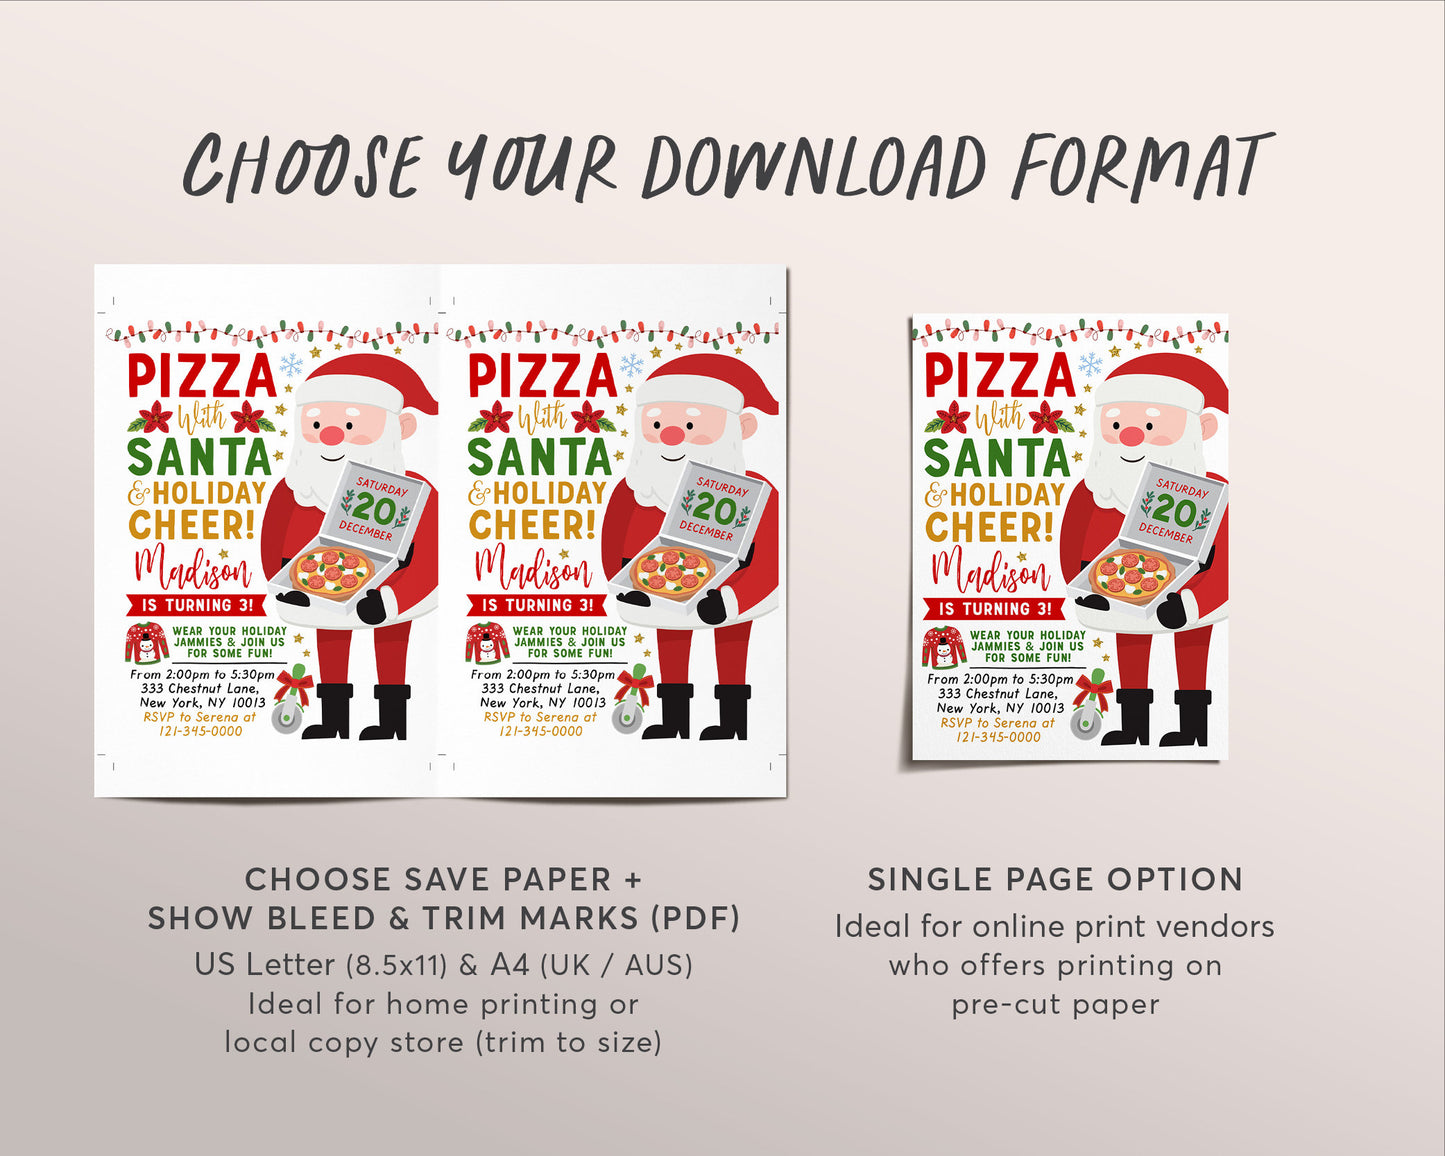 Pizza With Santa Invitation Editable Template, Pizza and Pajamas Christmas Party Invite Printable Evite, Holiday Kids Sleepover Party